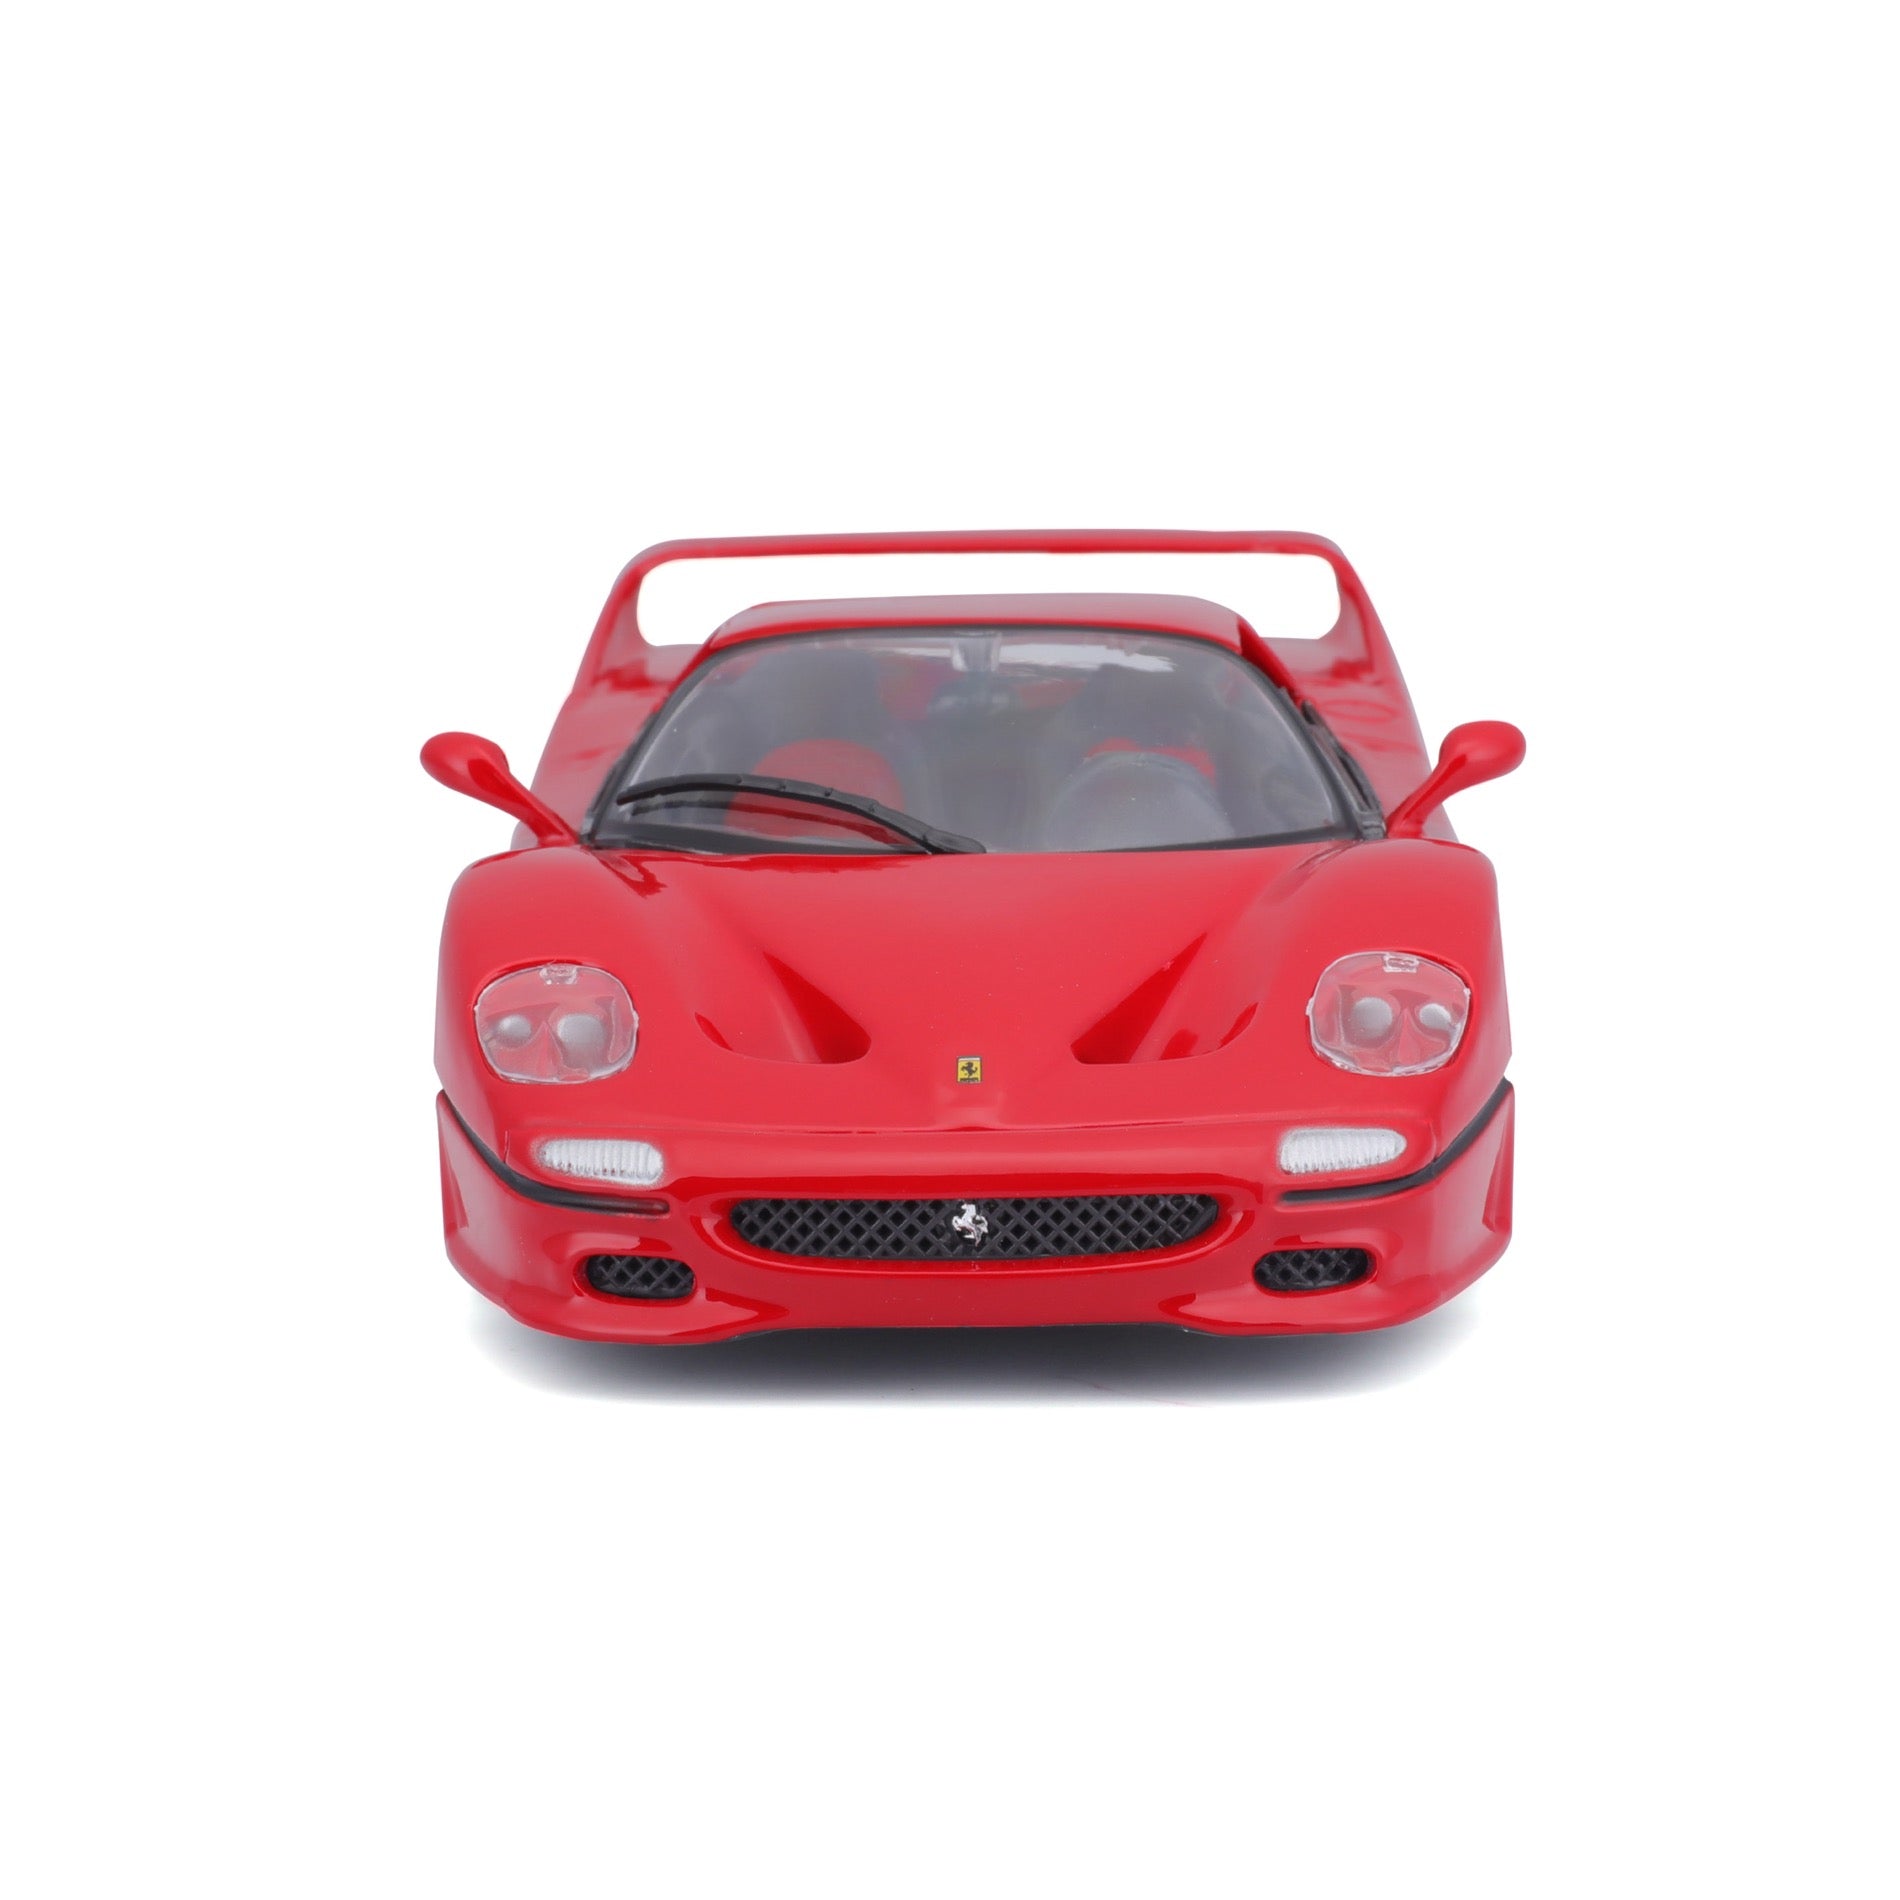 18-26010 Bburago Ferrari - R&P F50 - Rosso - 1:24